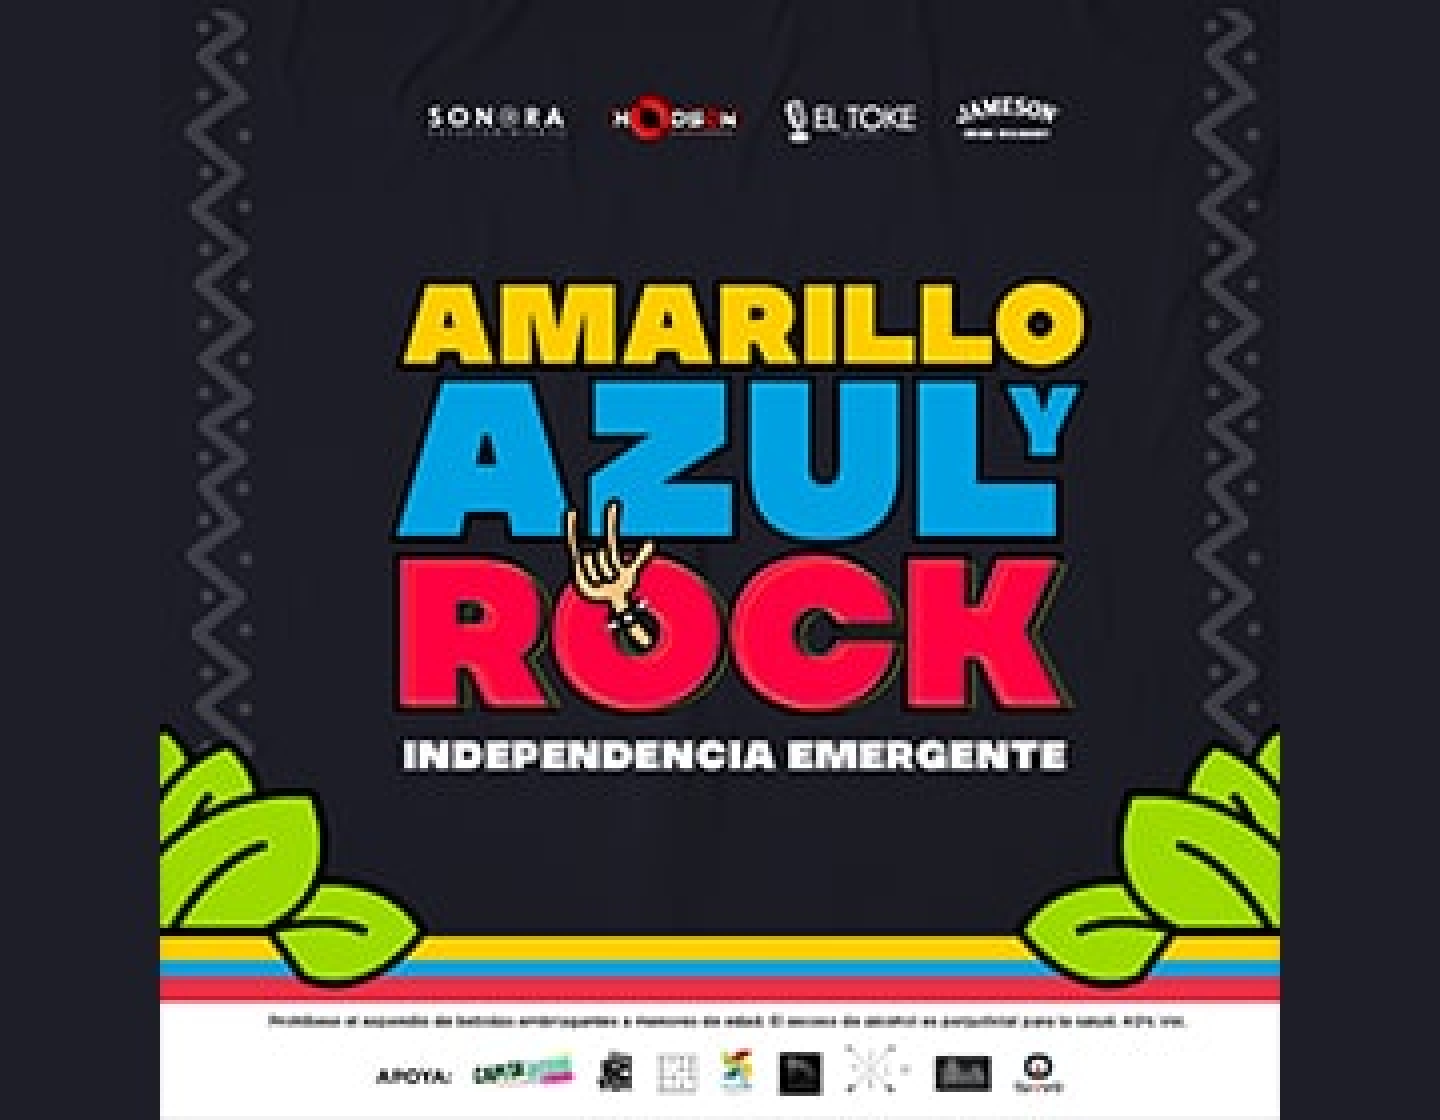 #AmarilloAzulYRock es homenaje emergente